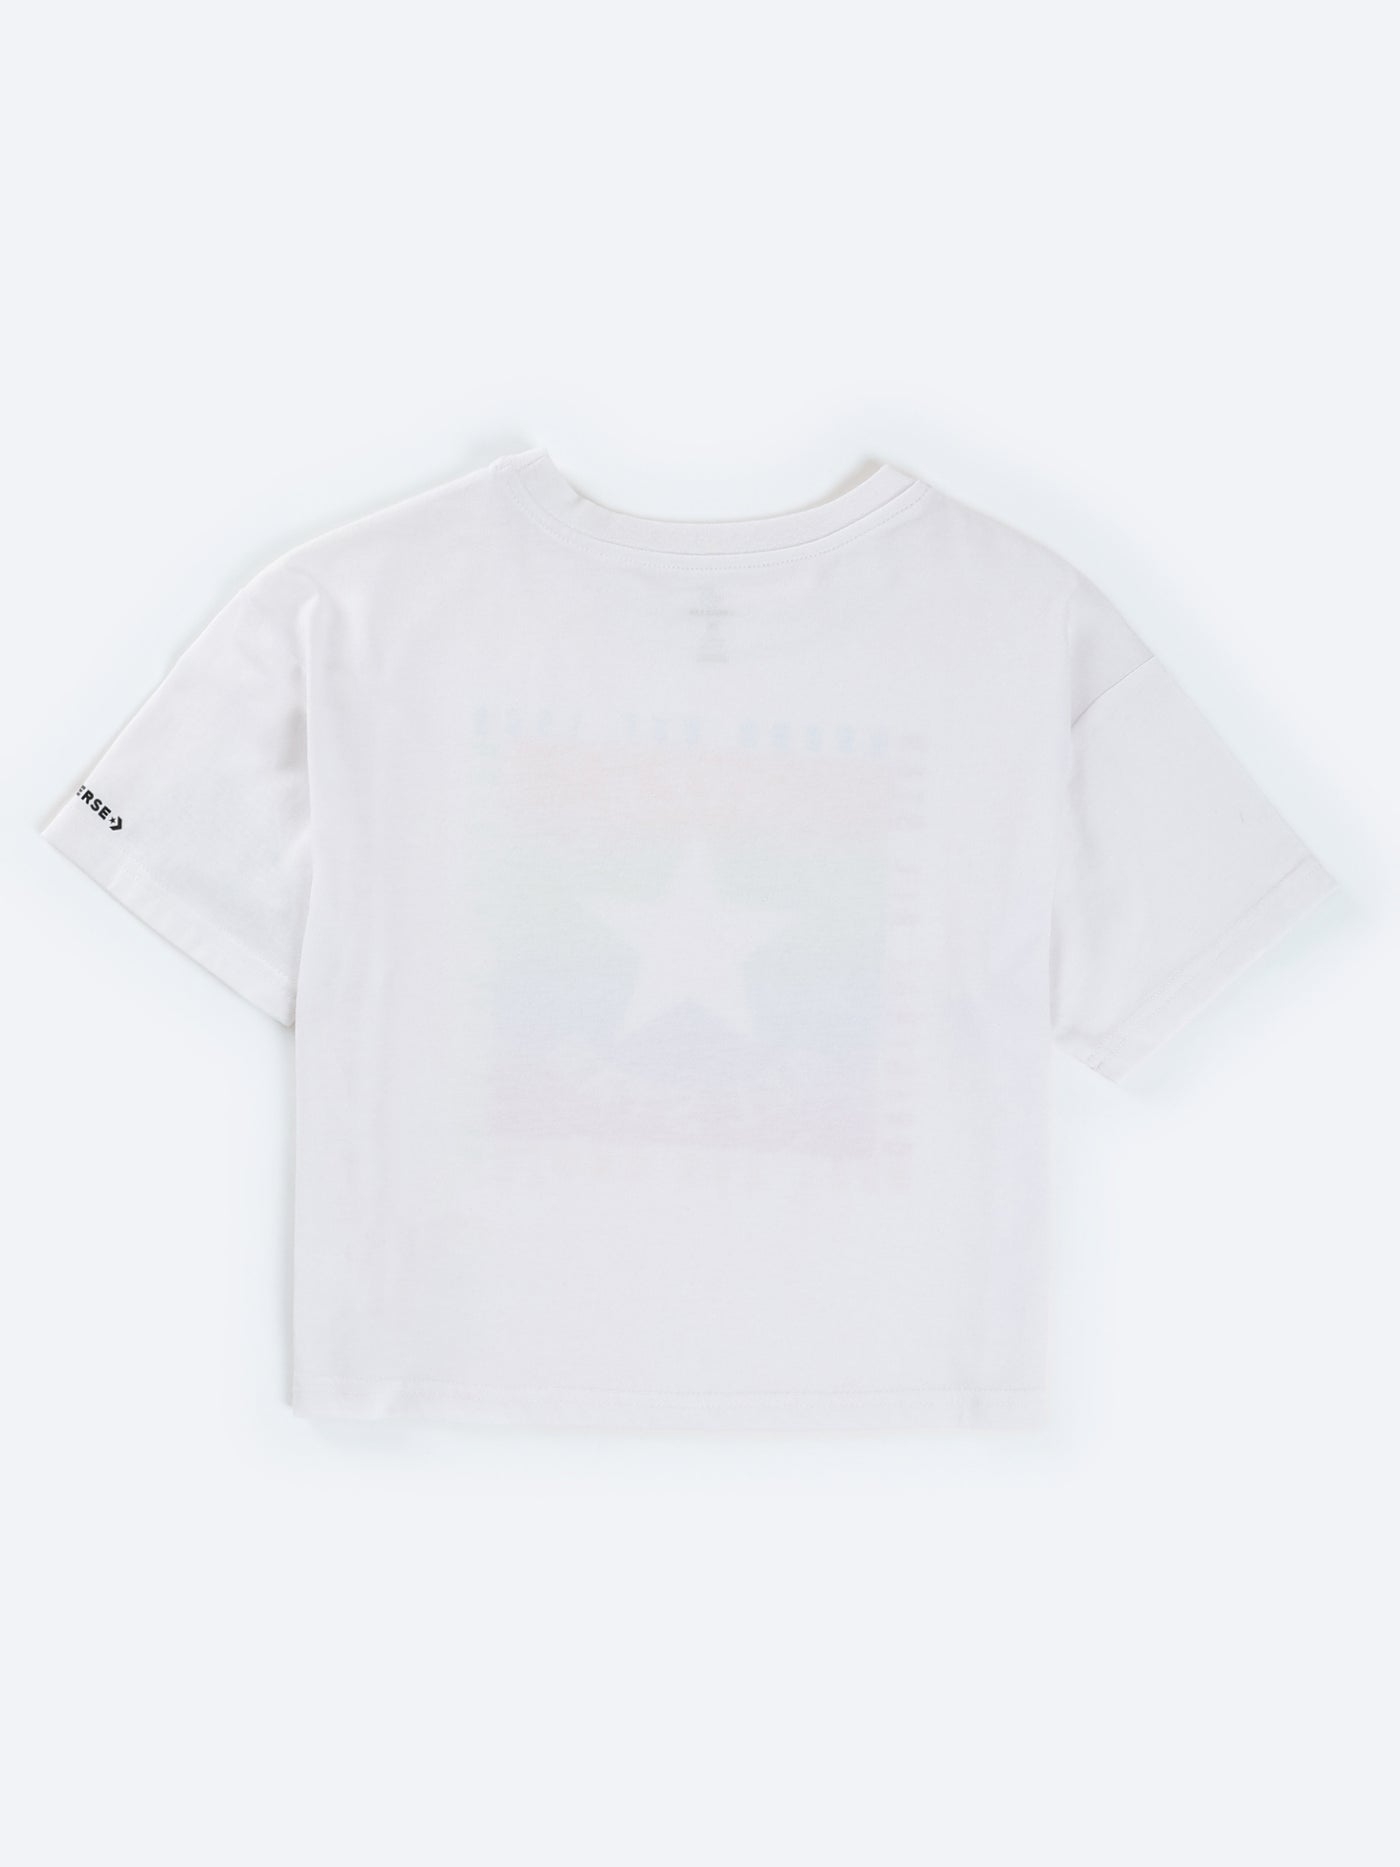 Converse Kids Girls Printed Half Sleeves T-Shirt